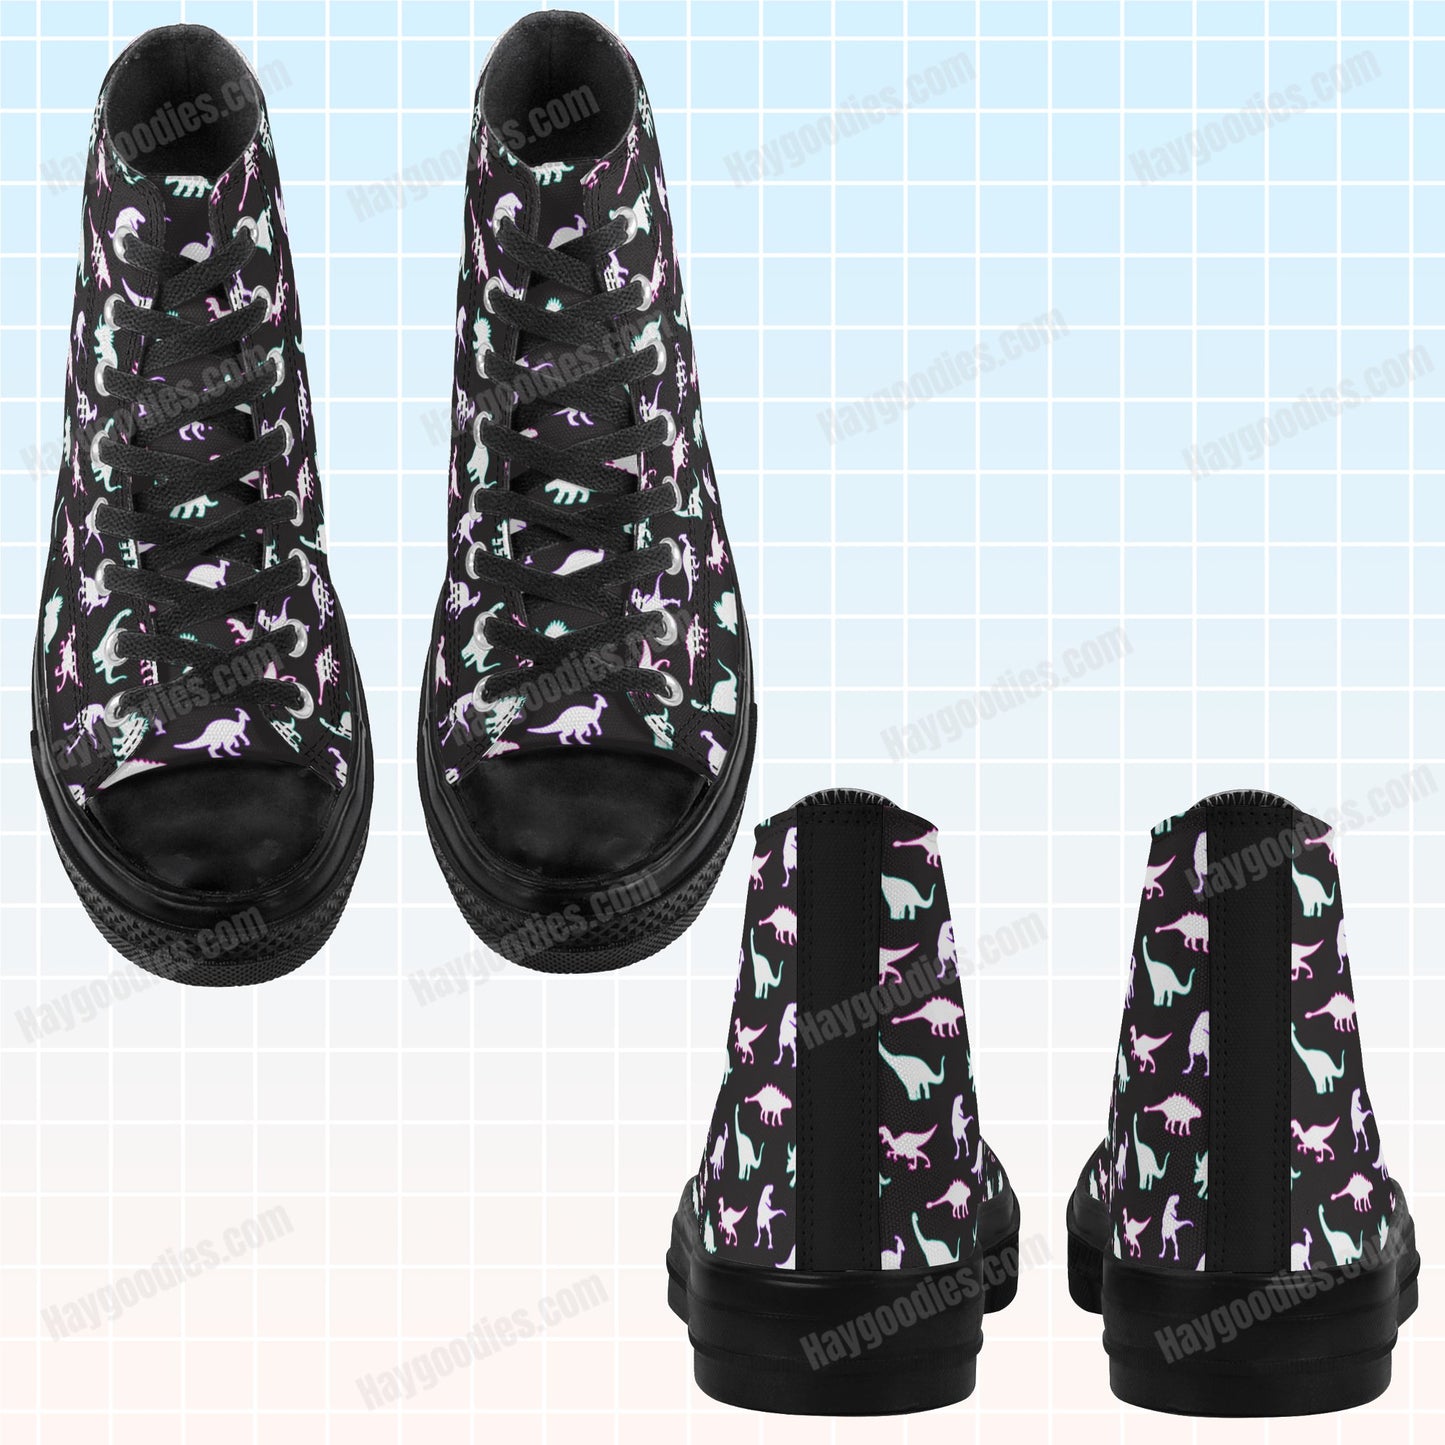 Neon Dinosaur Pattern Black High Top Canvas Shoes-Men's Sizes